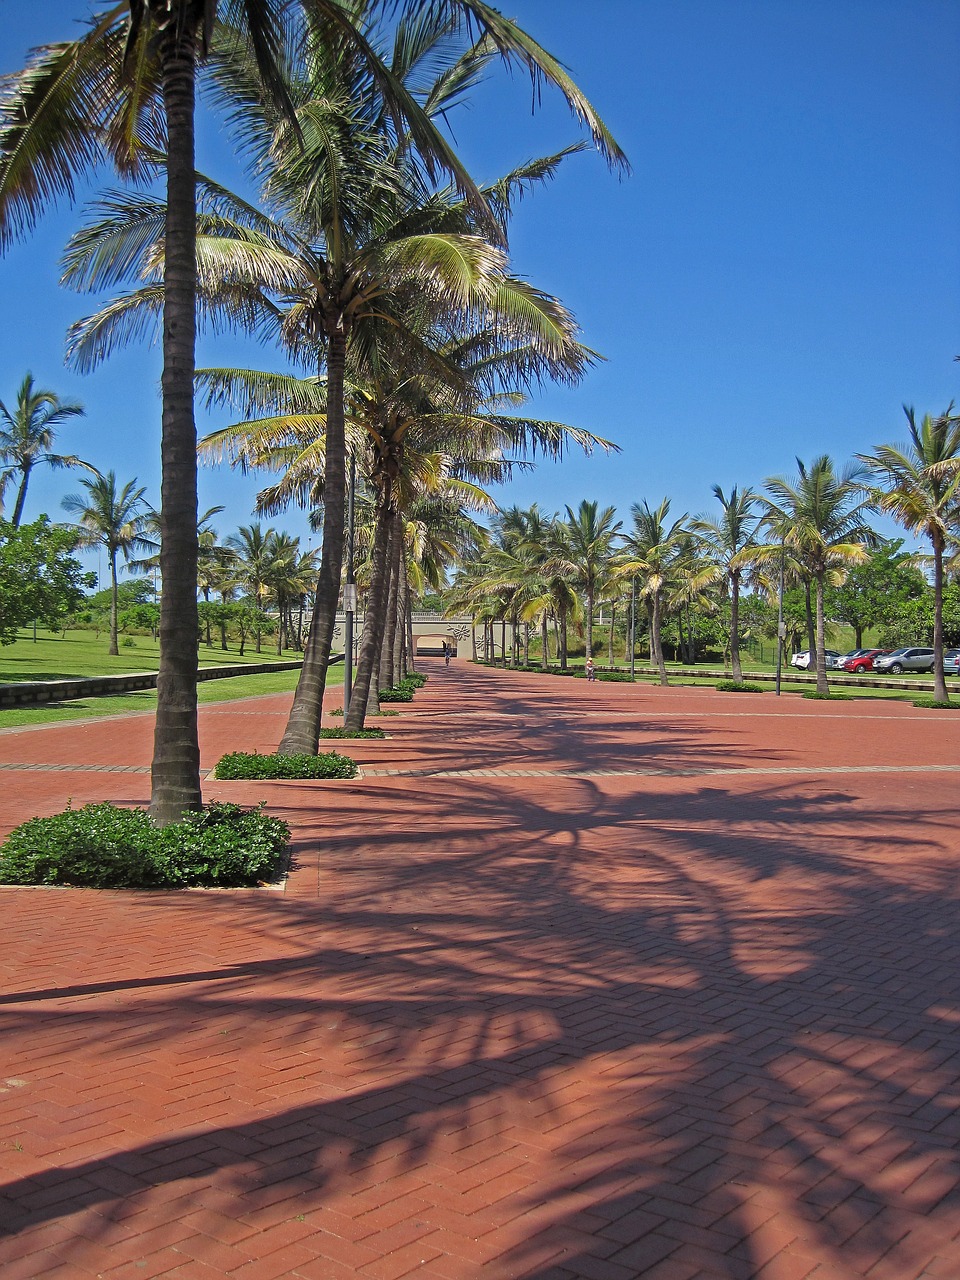 boulevard palm trees paving free photo